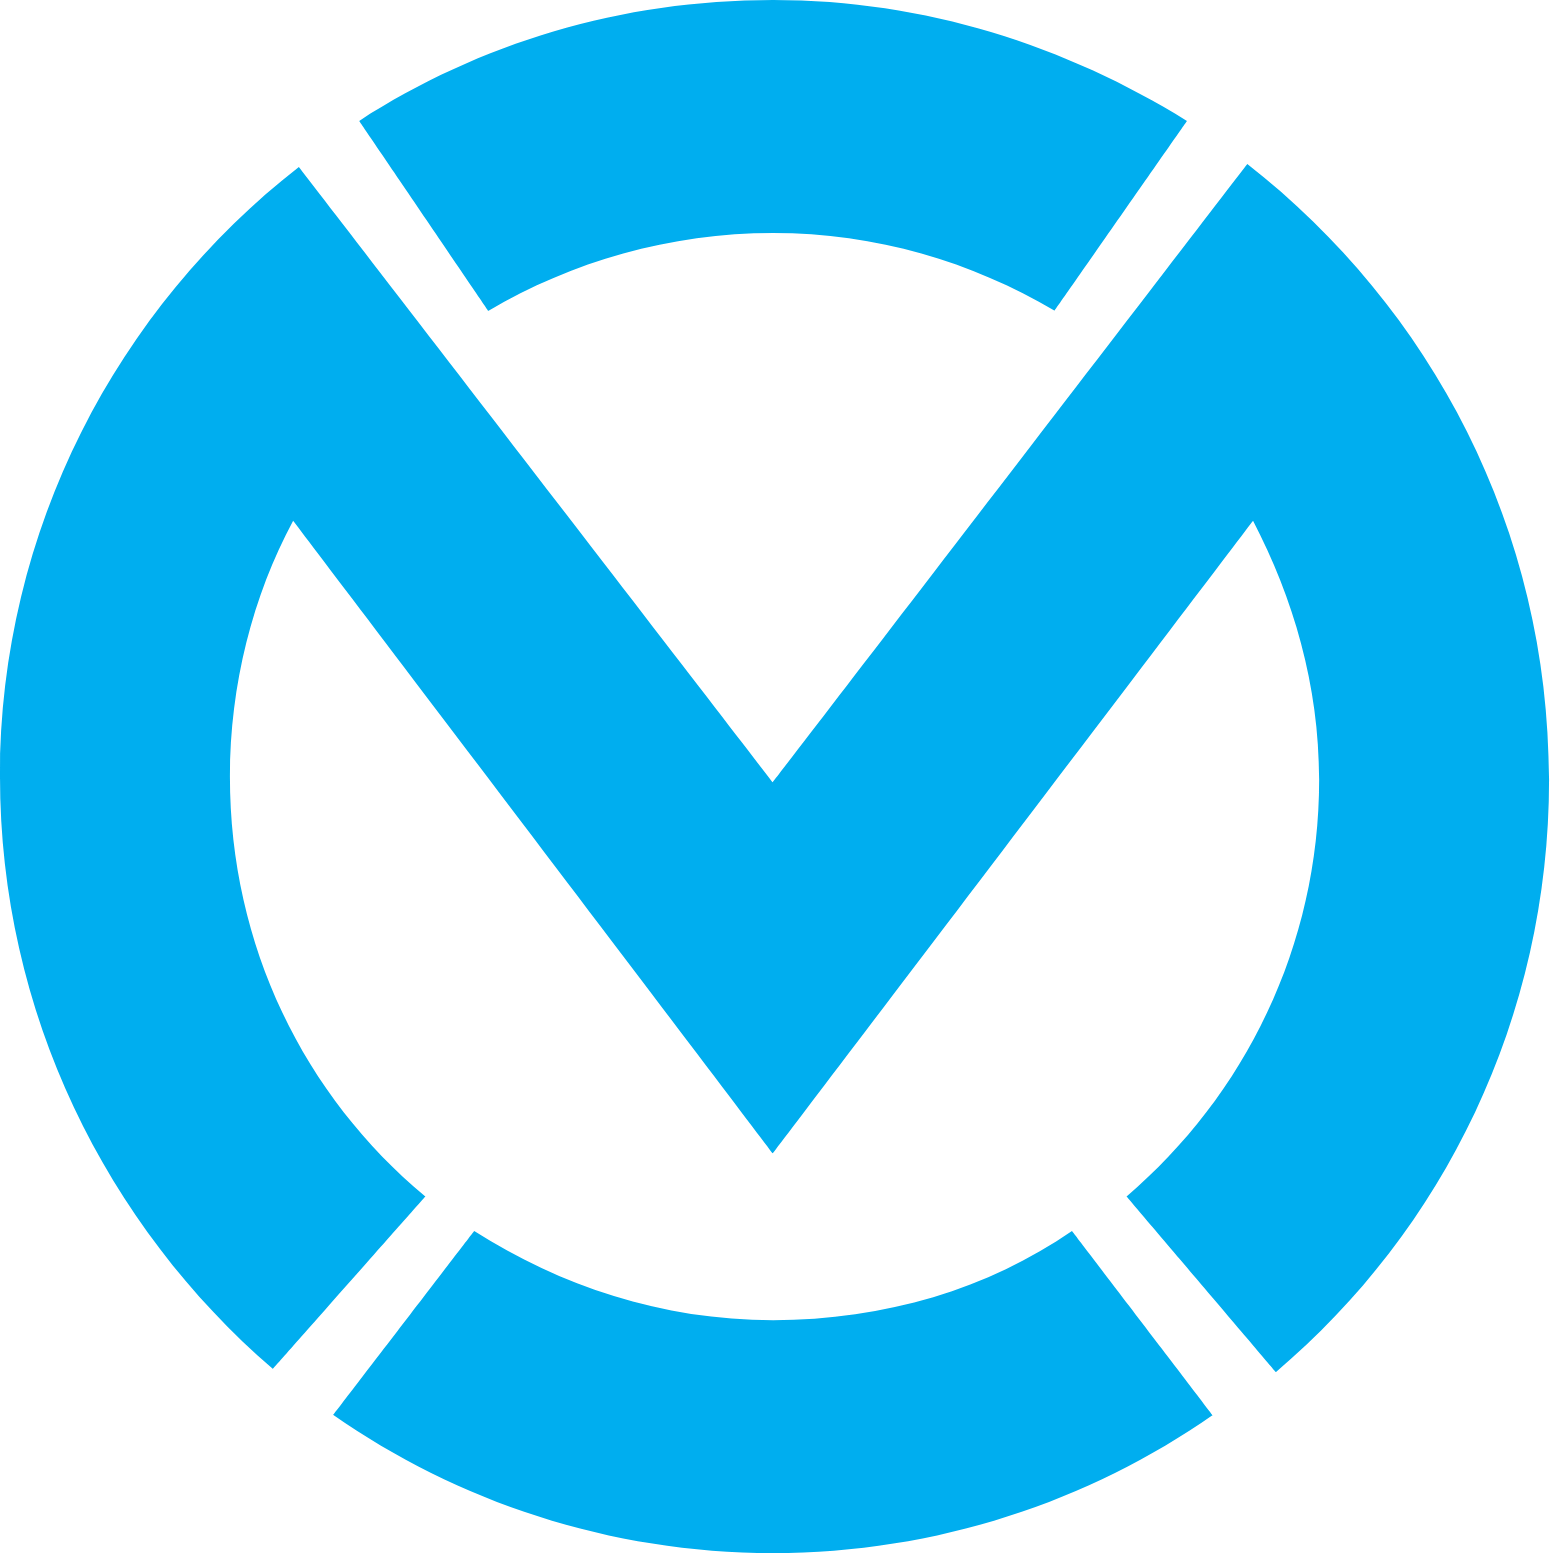 Munters Group AB logo (PNG transparent)